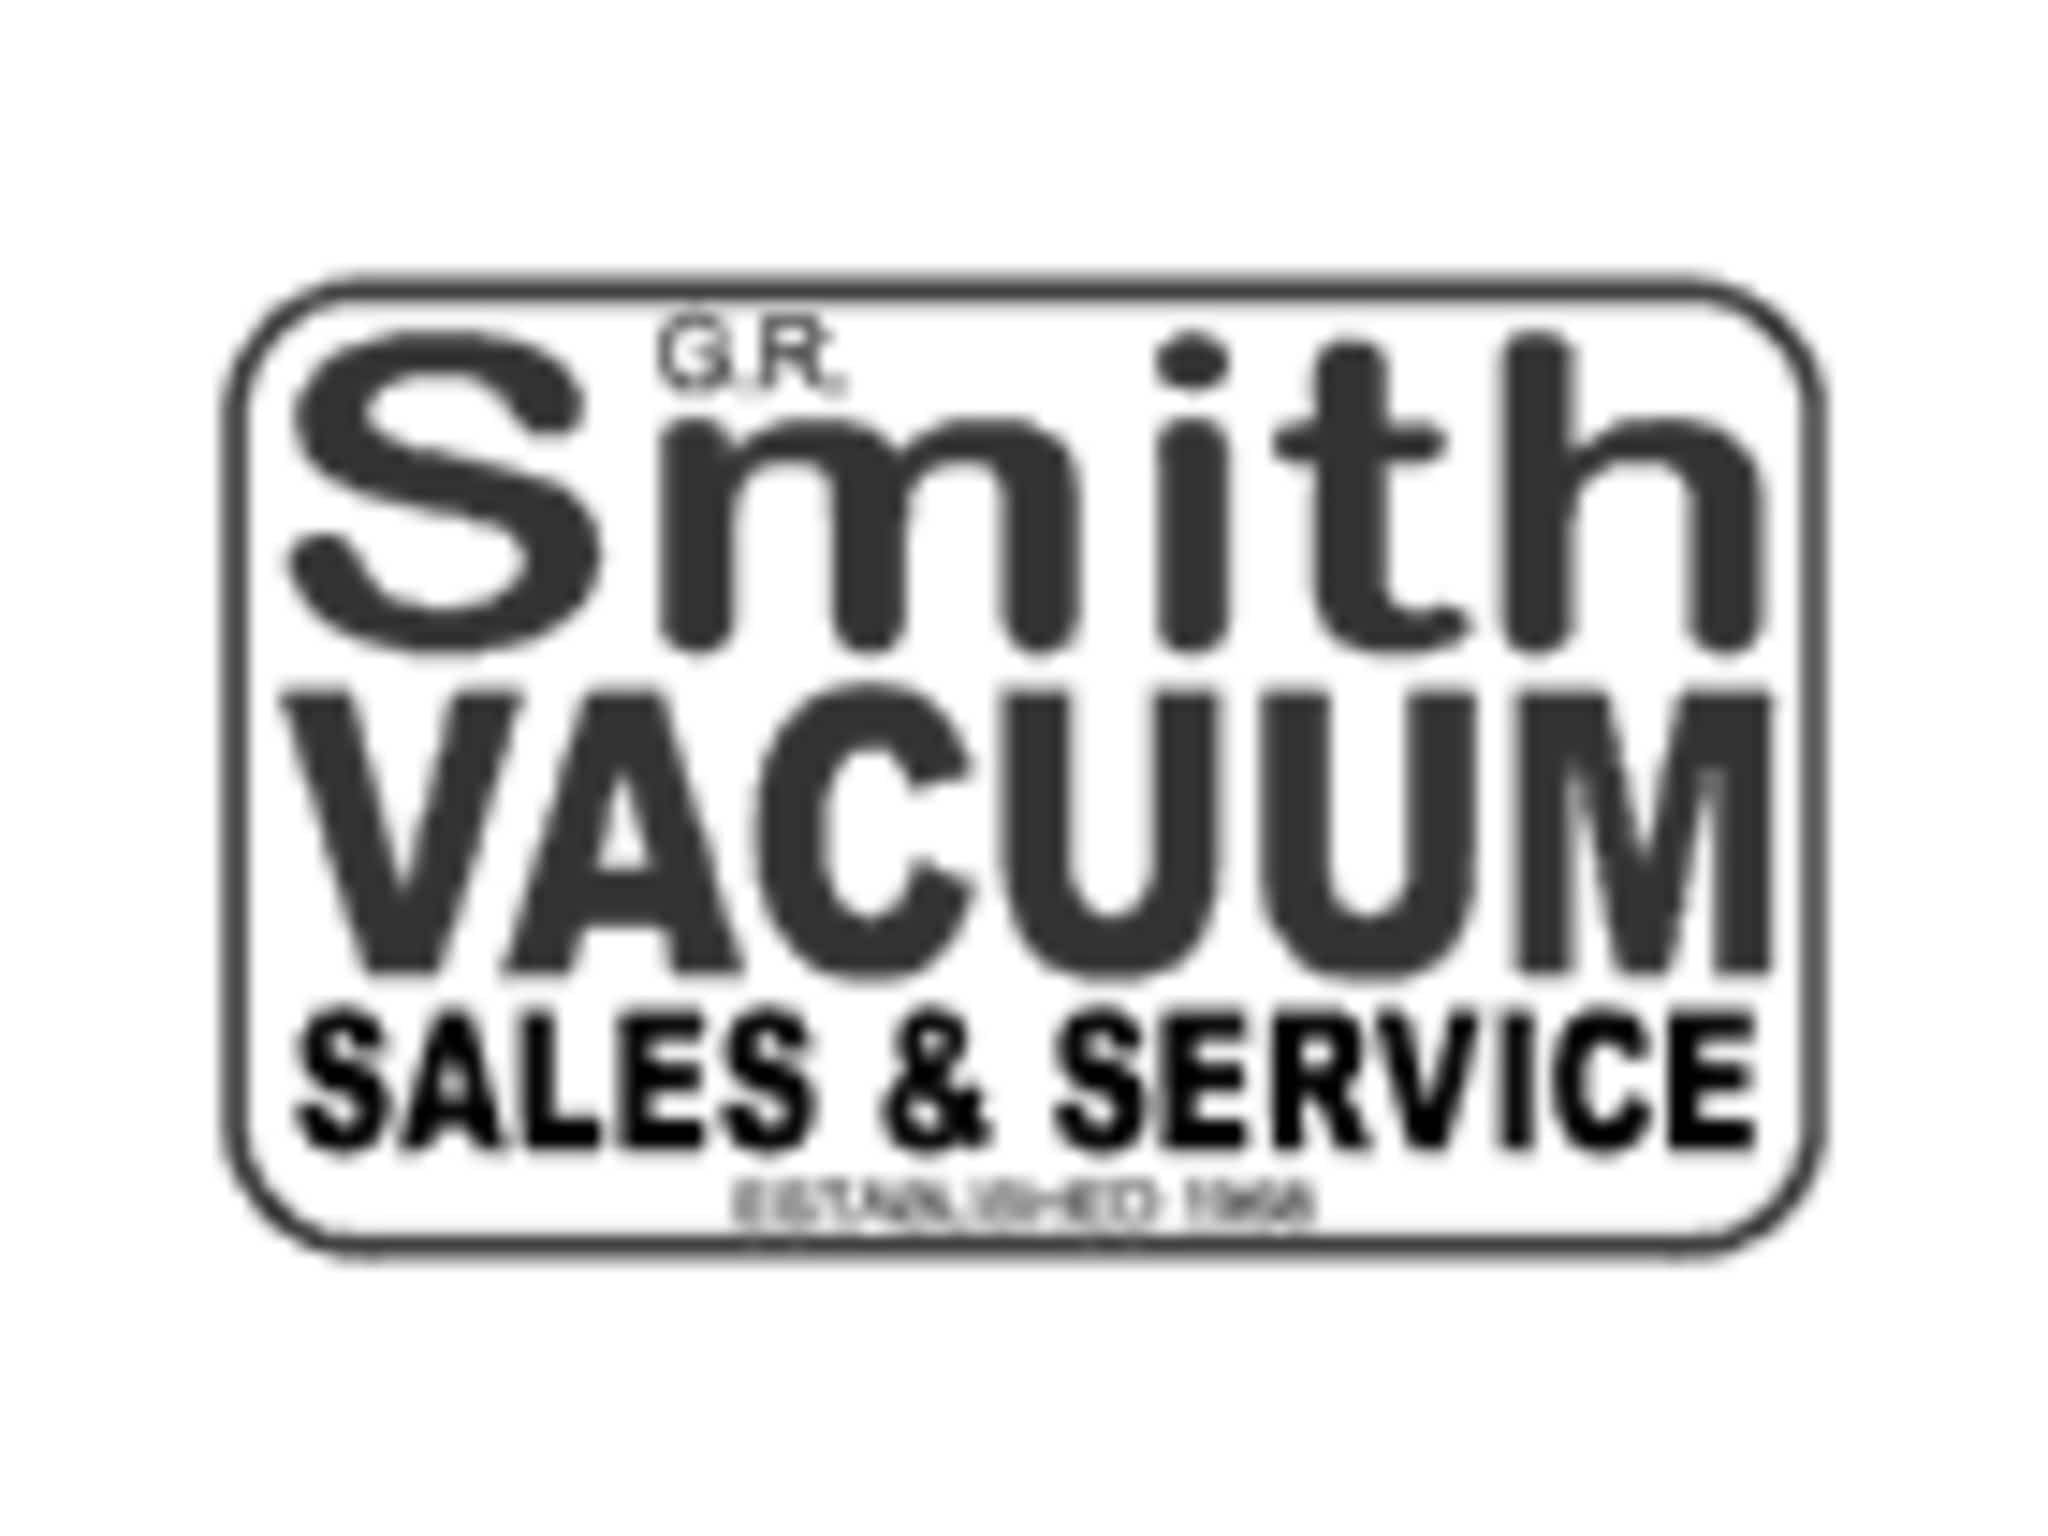 photo G R Smith Vacuums Sales & Service